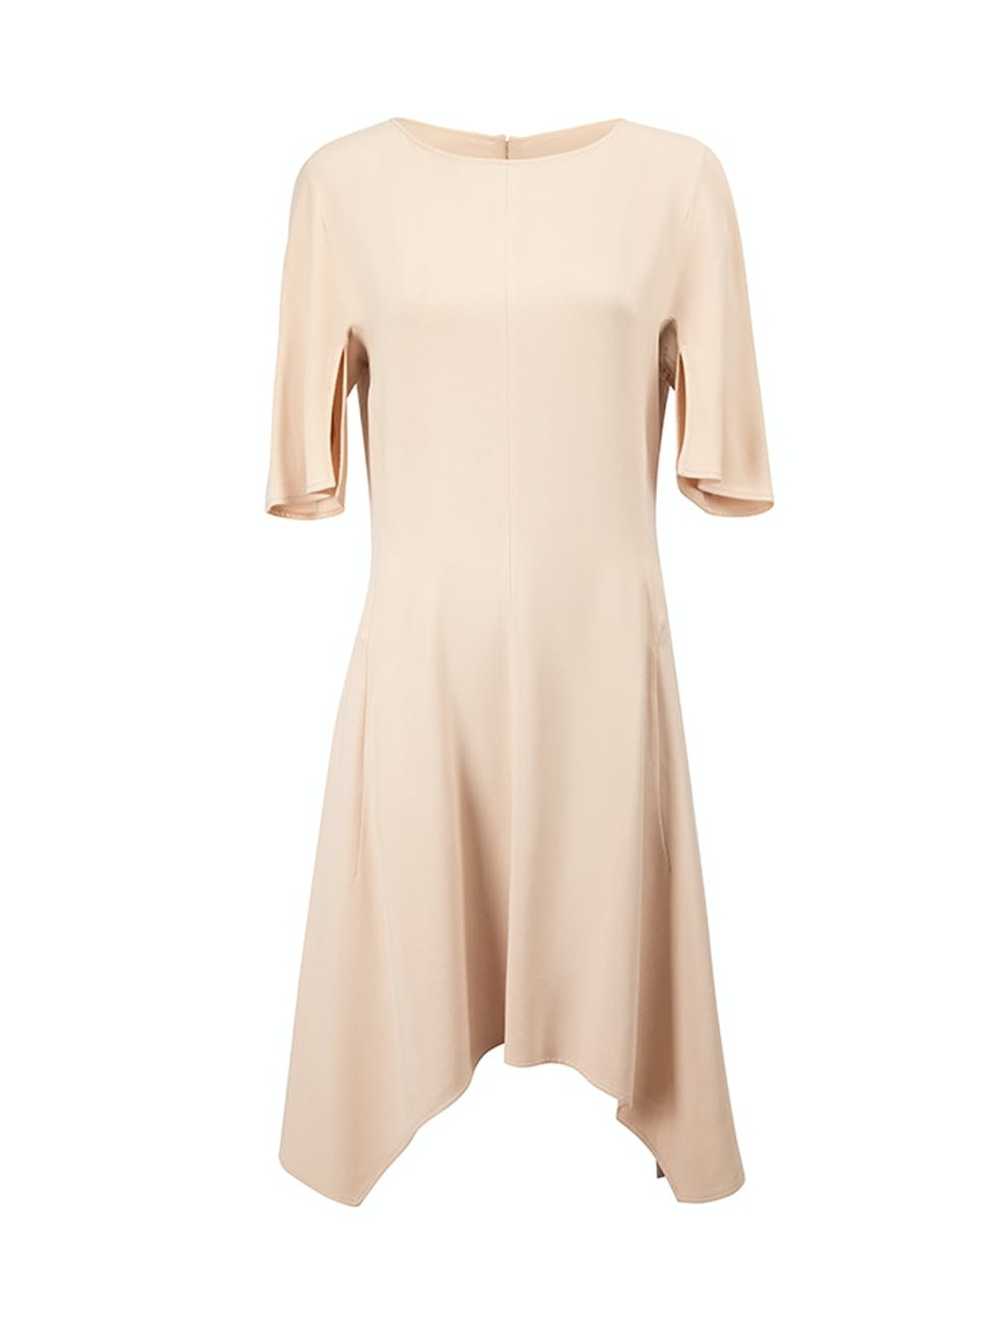 Stella McCartney Pink Draped Knee Length Dress - image 1